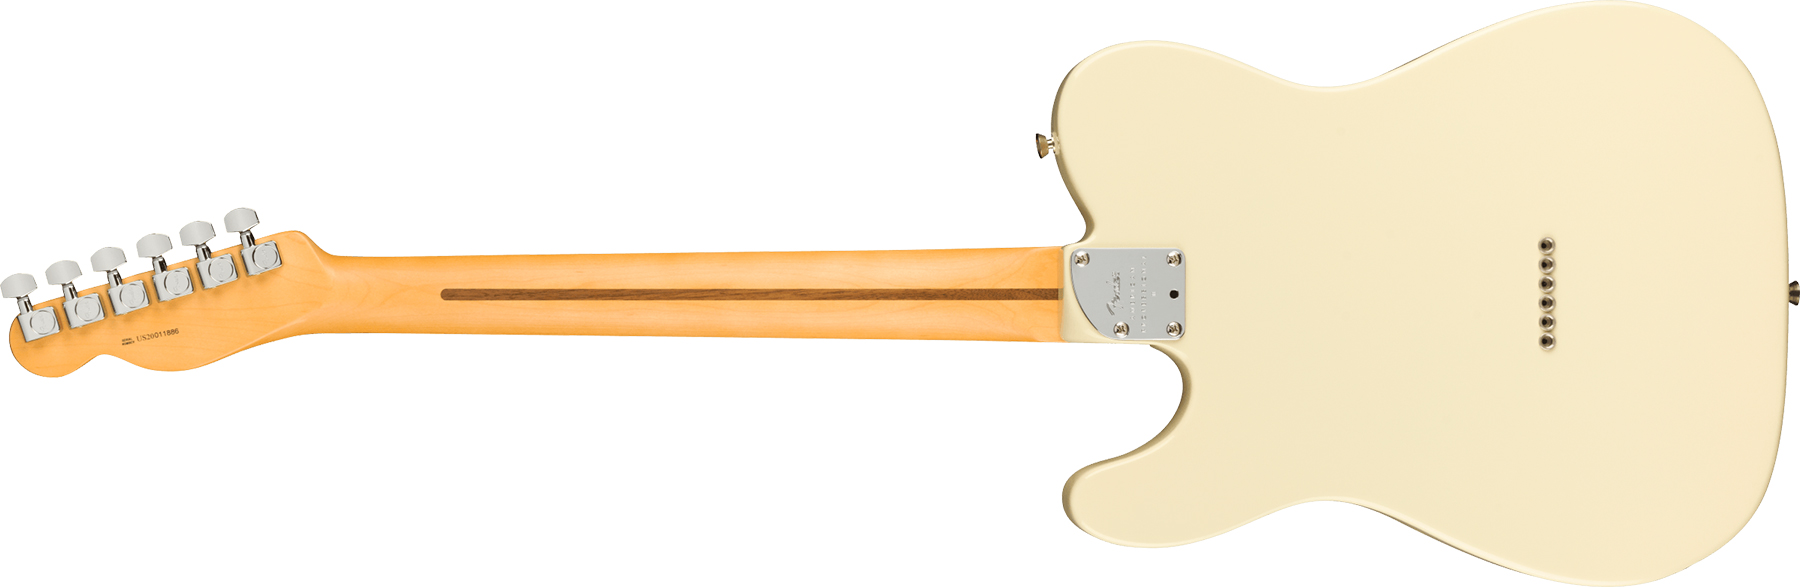 Fender Tele American Professional Ii Usa Rw - Olympic White - Guitarra eléctrica con forma de tel - Variation 1